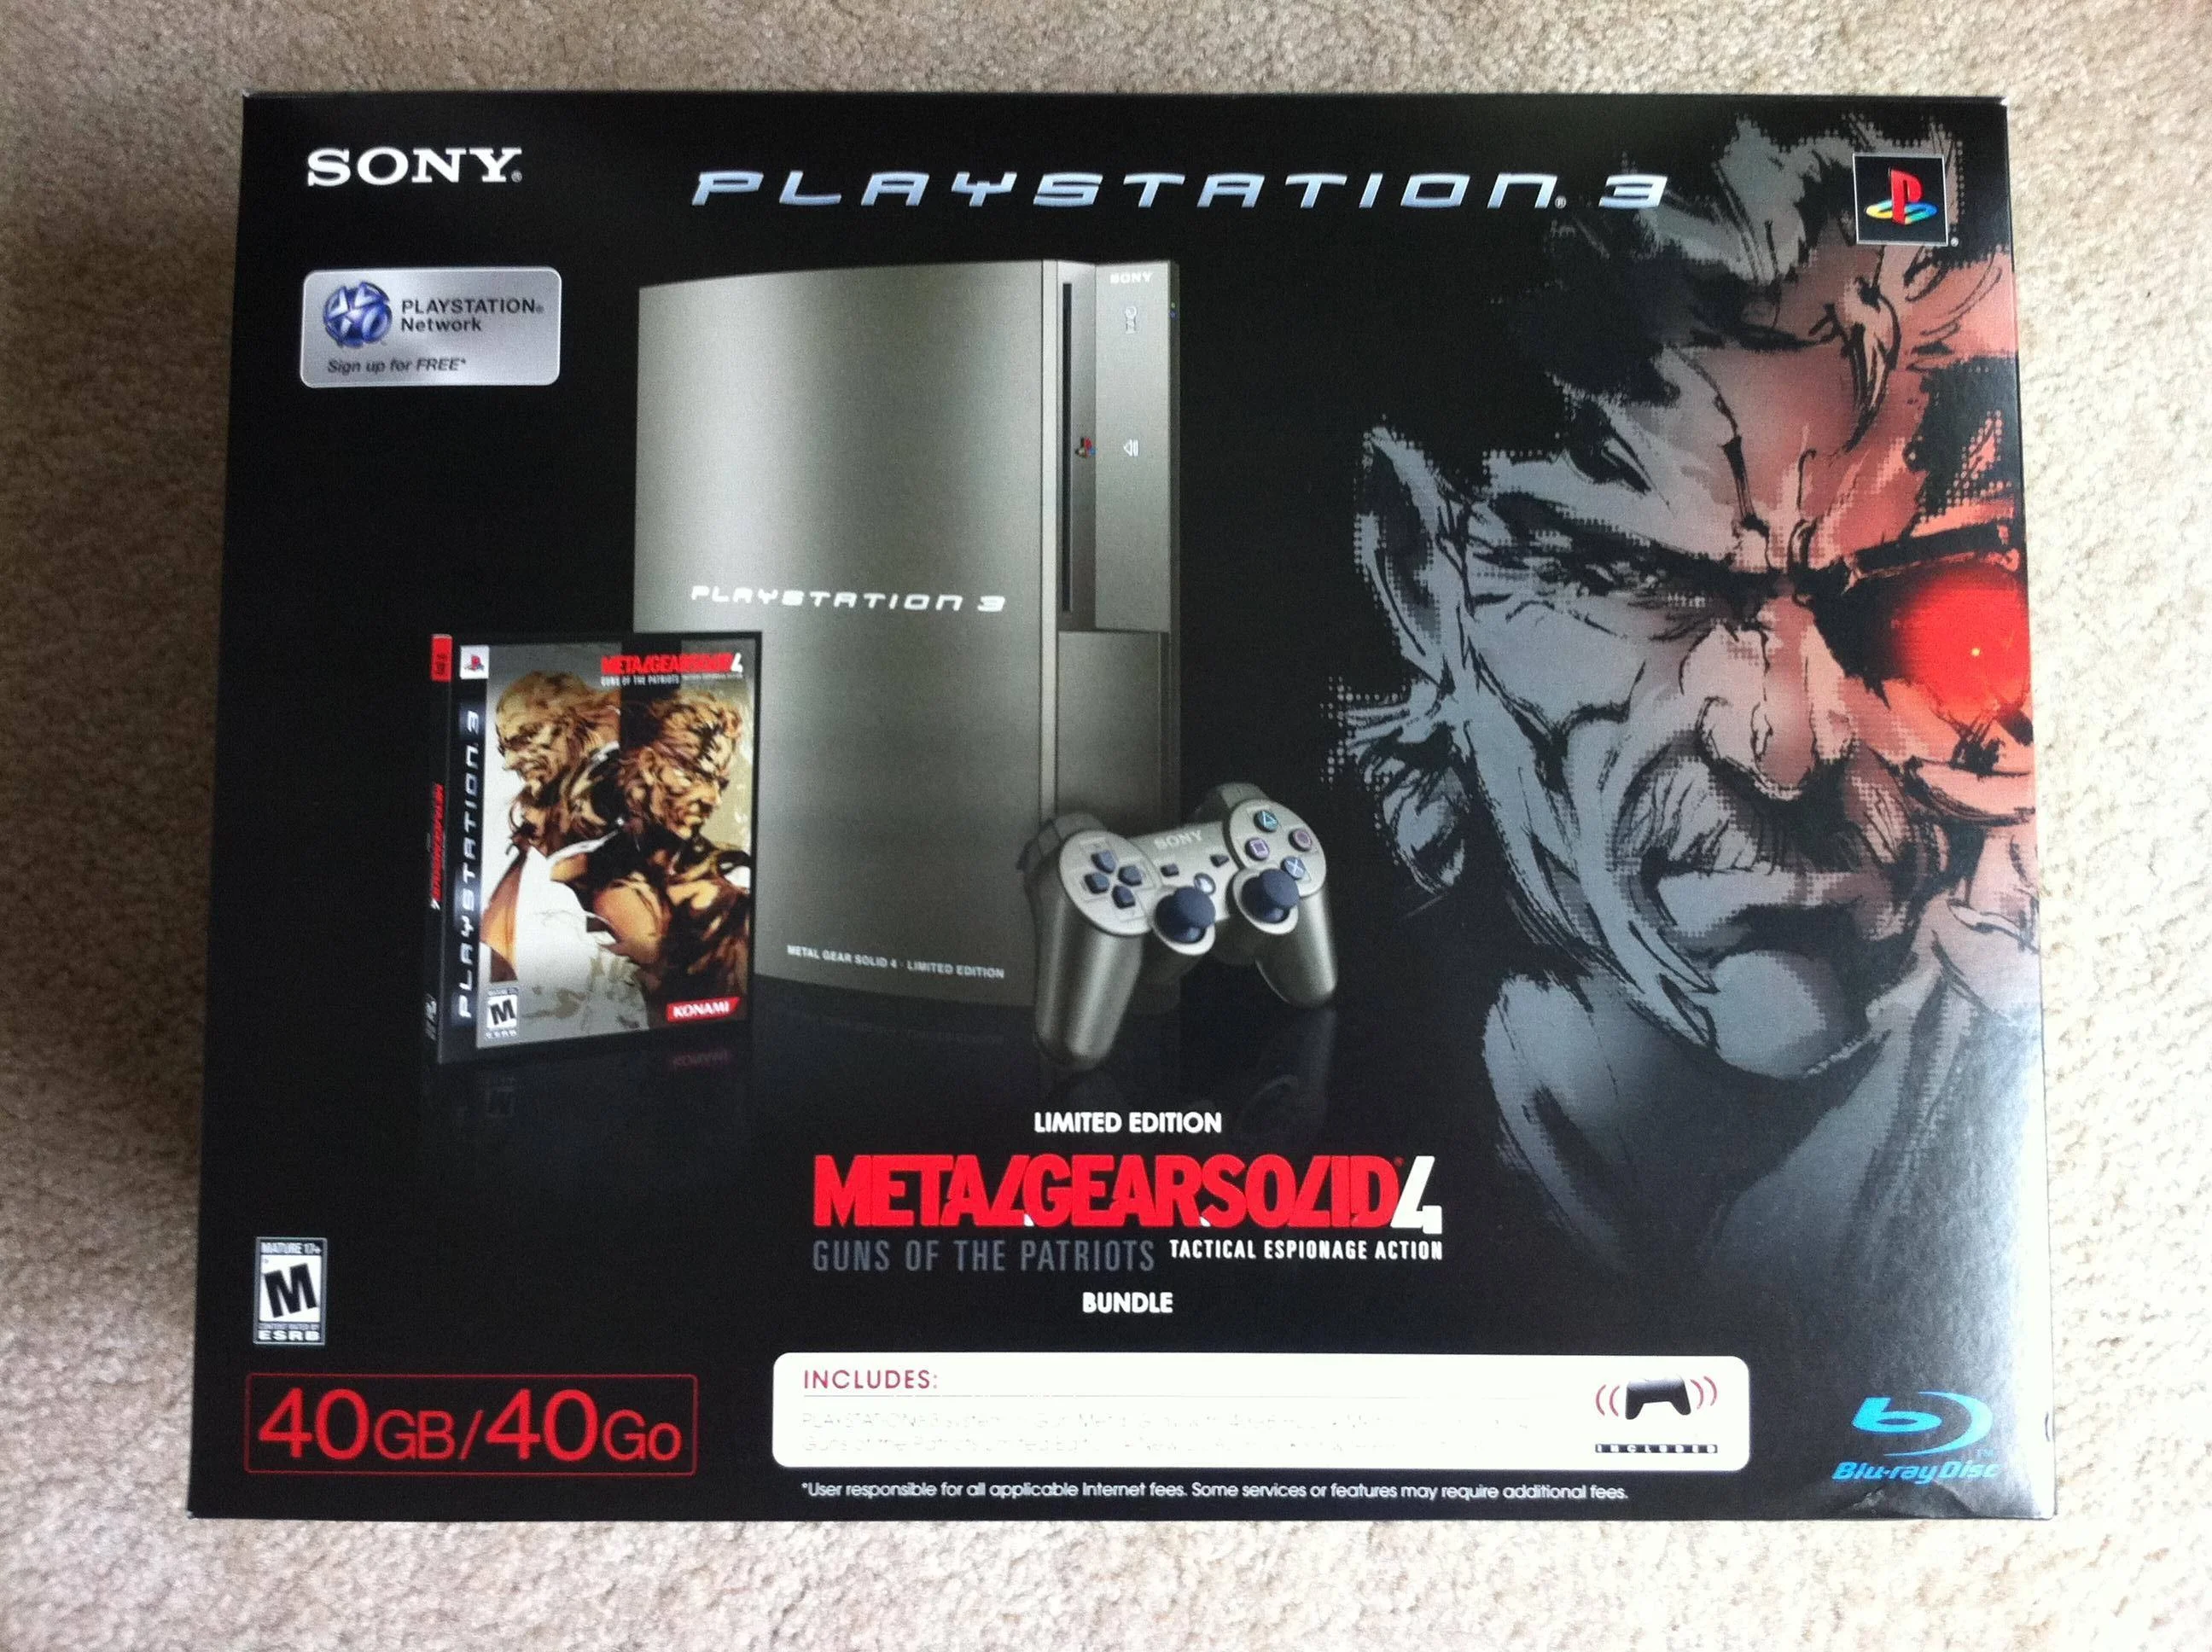 Игры пс3 через флешку. Metal Gear Limited Edition ps3. Metal Gear Solid 4 ps3 Limited Edition. Ps3 Slim Limited Edition. Sony PLAYSTATION 3 Metal Gear Solid Limited Edition.